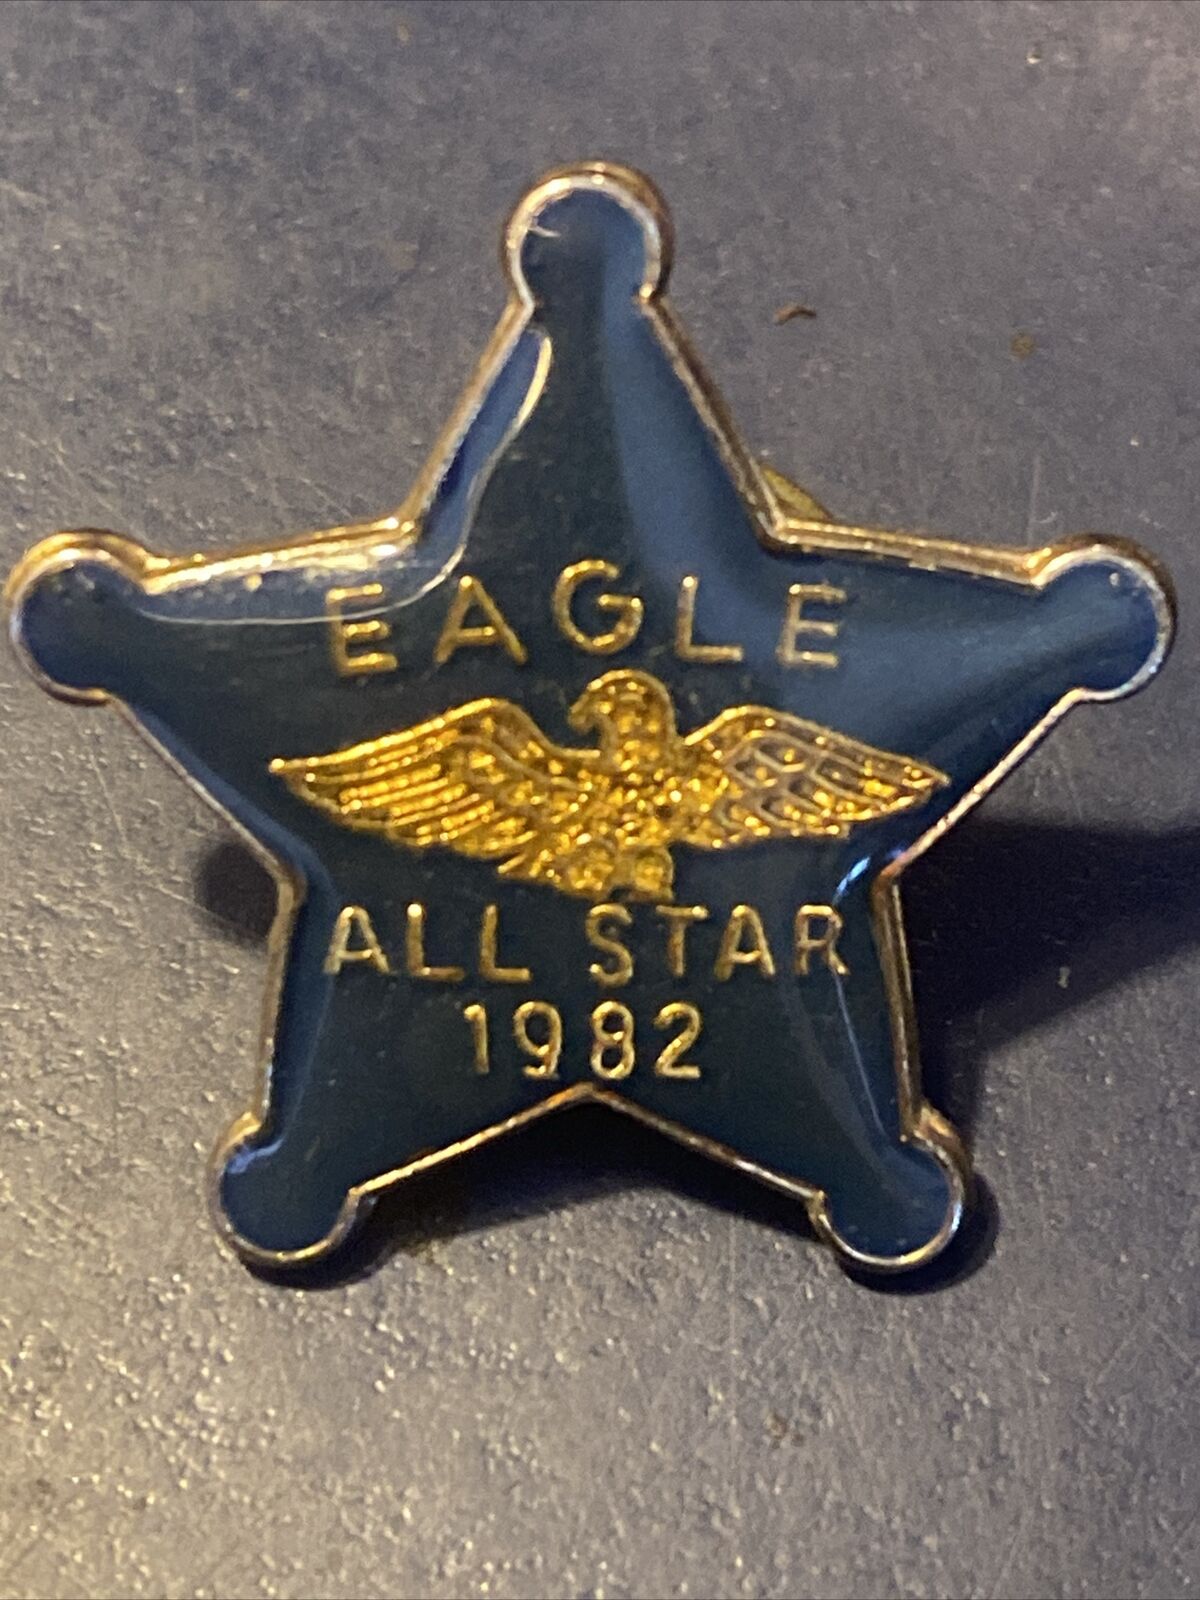 Eagle All Star 1982 Badge Pin Veterans Military Lapel Pin